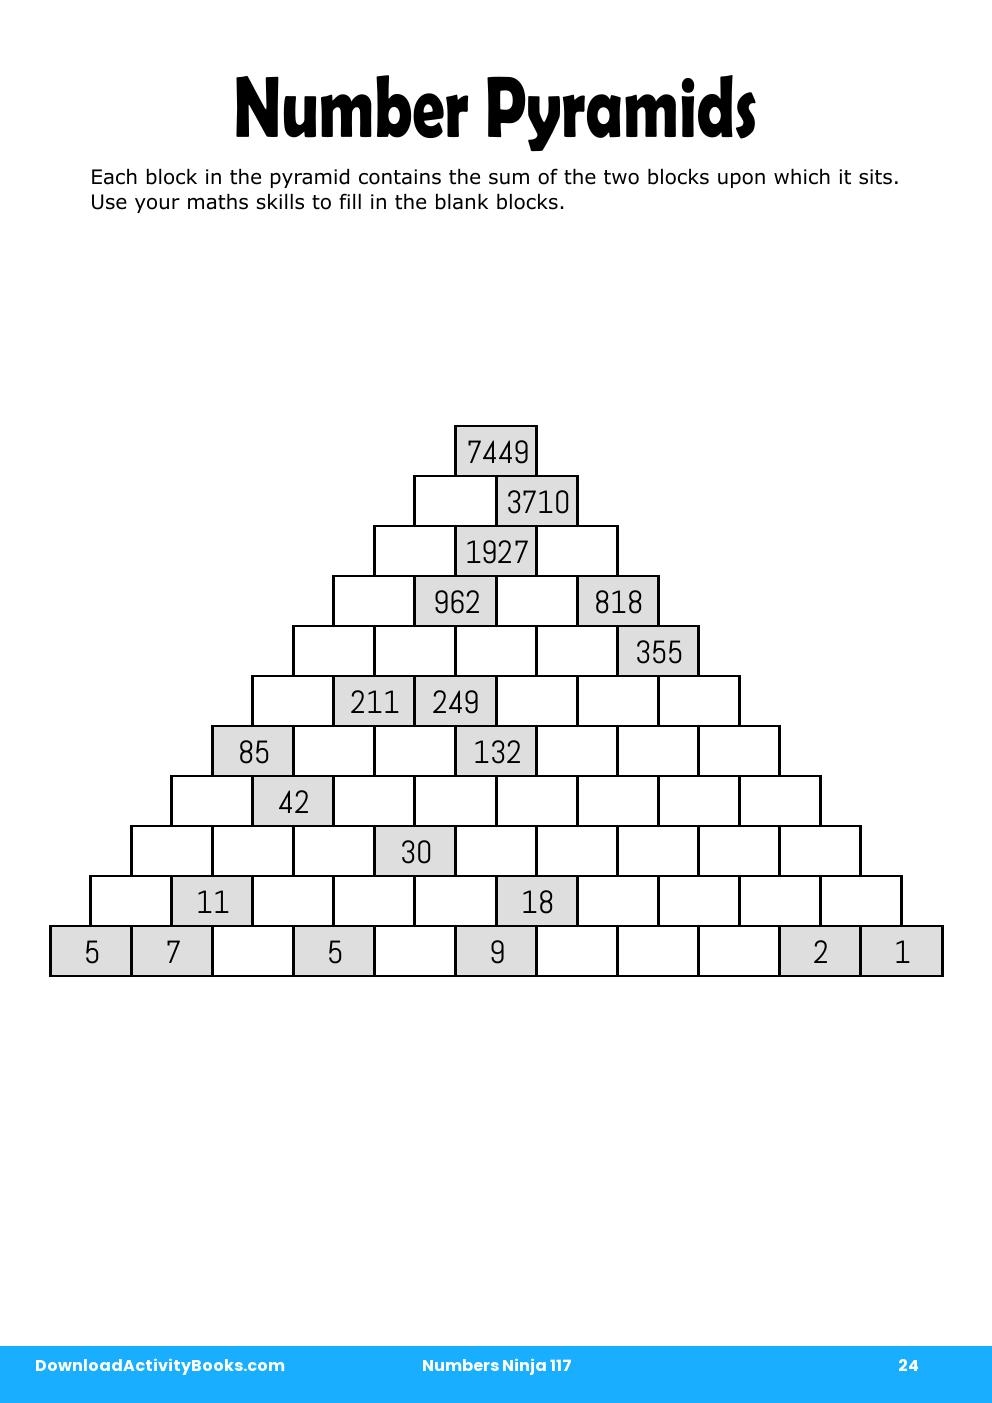 Number Pyramids in Numbers Ninja 117